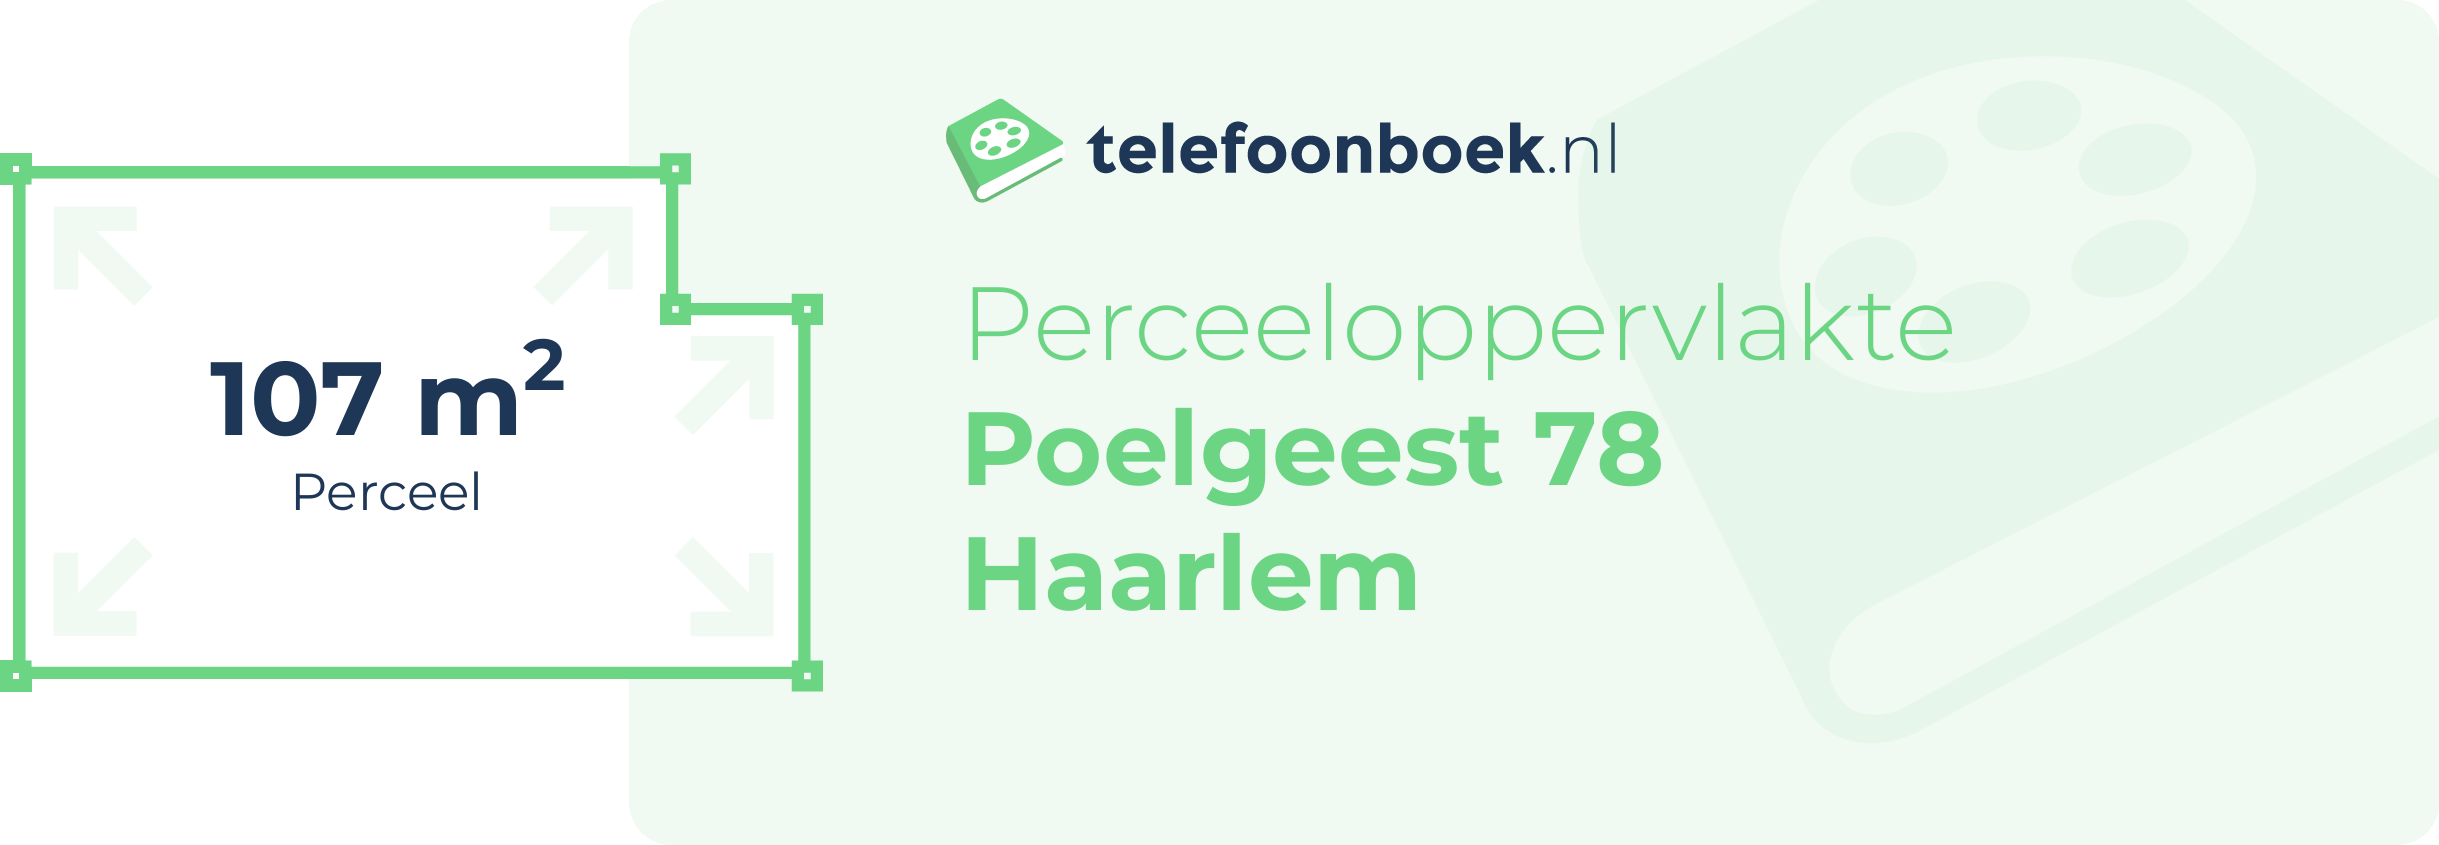 Perceeloppervlakte Poelgeest 78 Haarlem